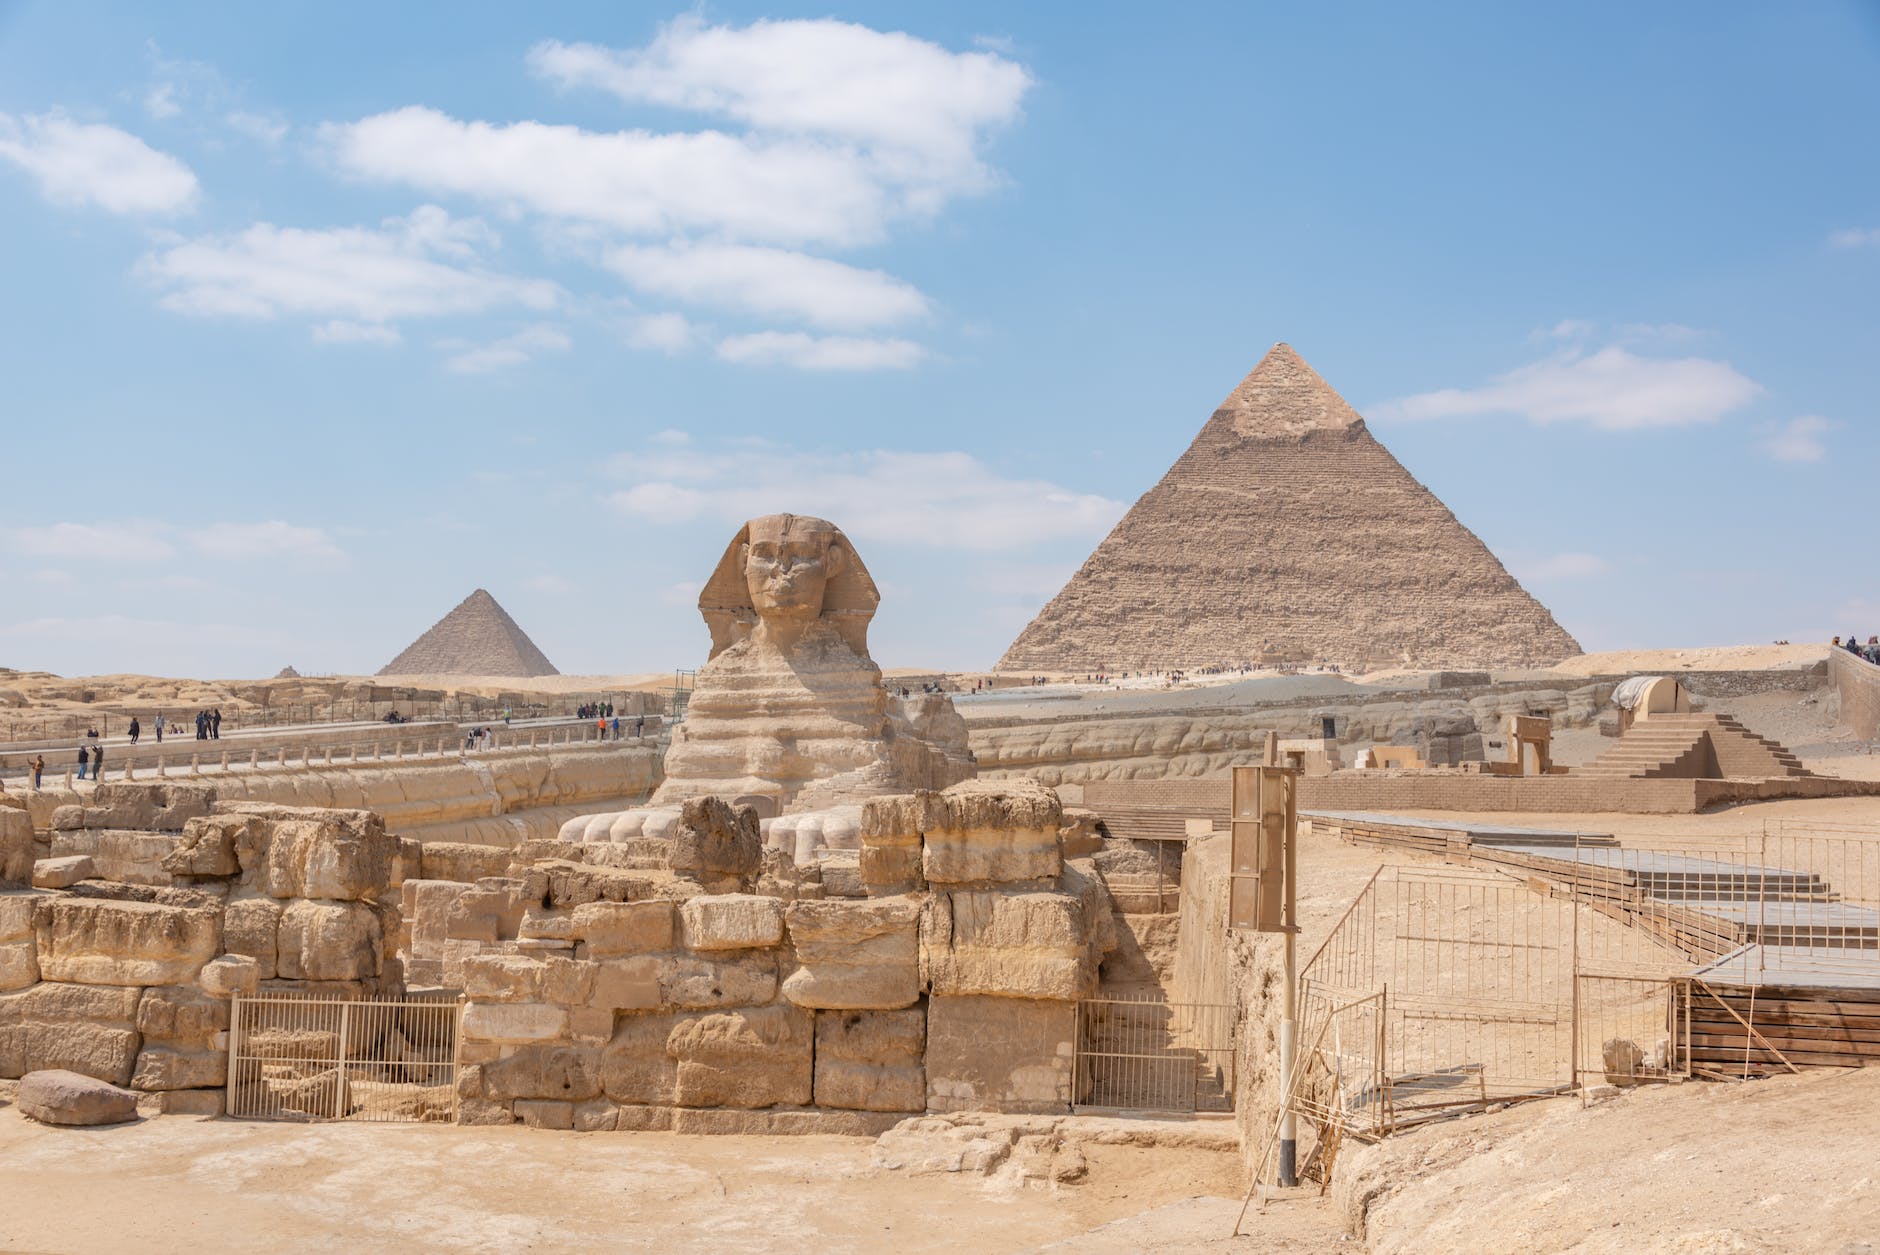 pyramids and sphinx statue in desert